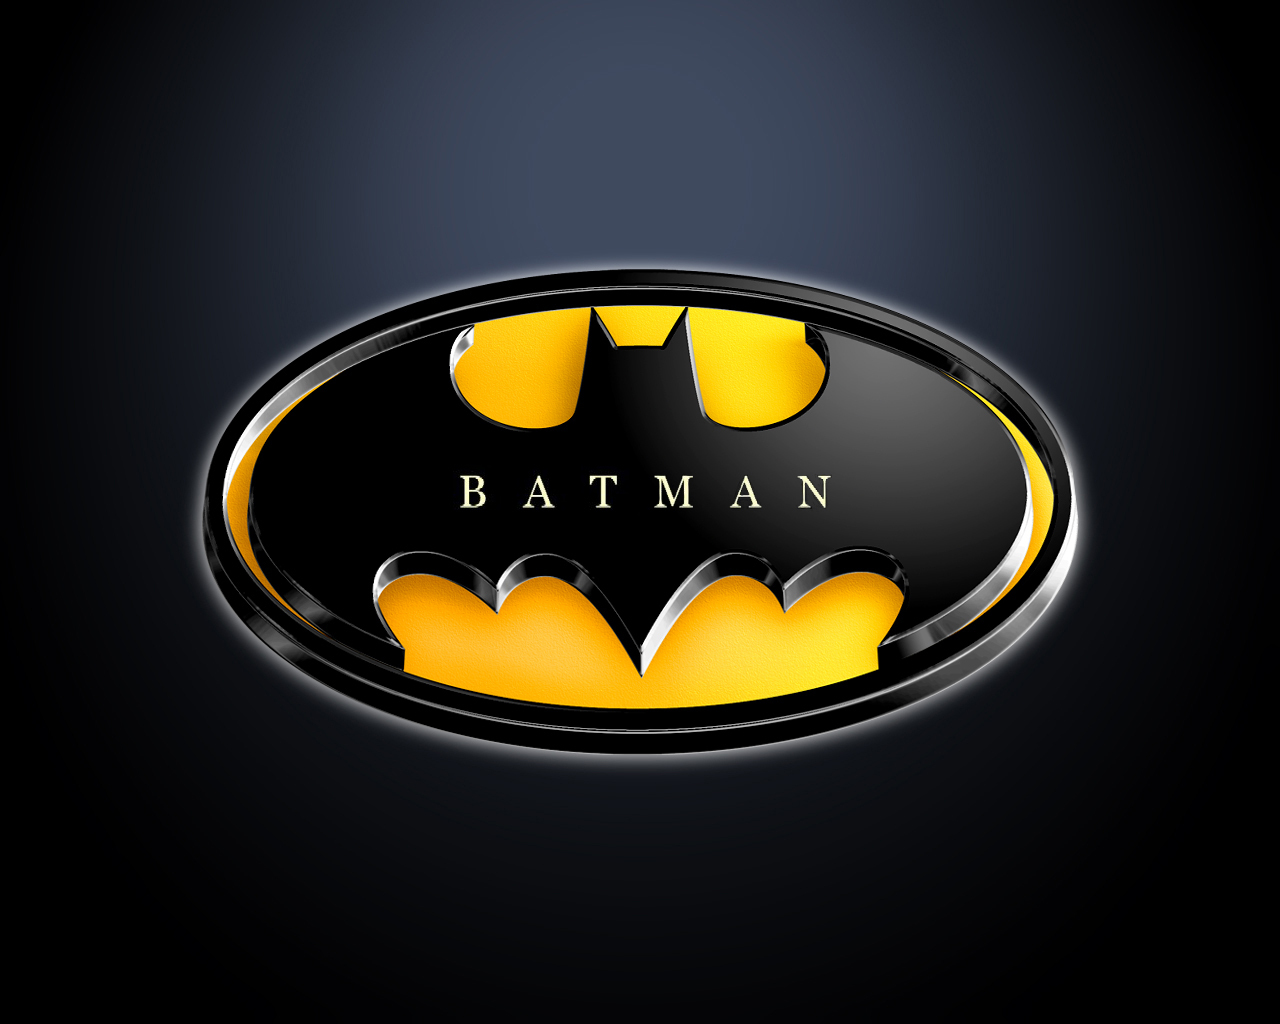 Batman Image Logo HD Wallpaper And Background